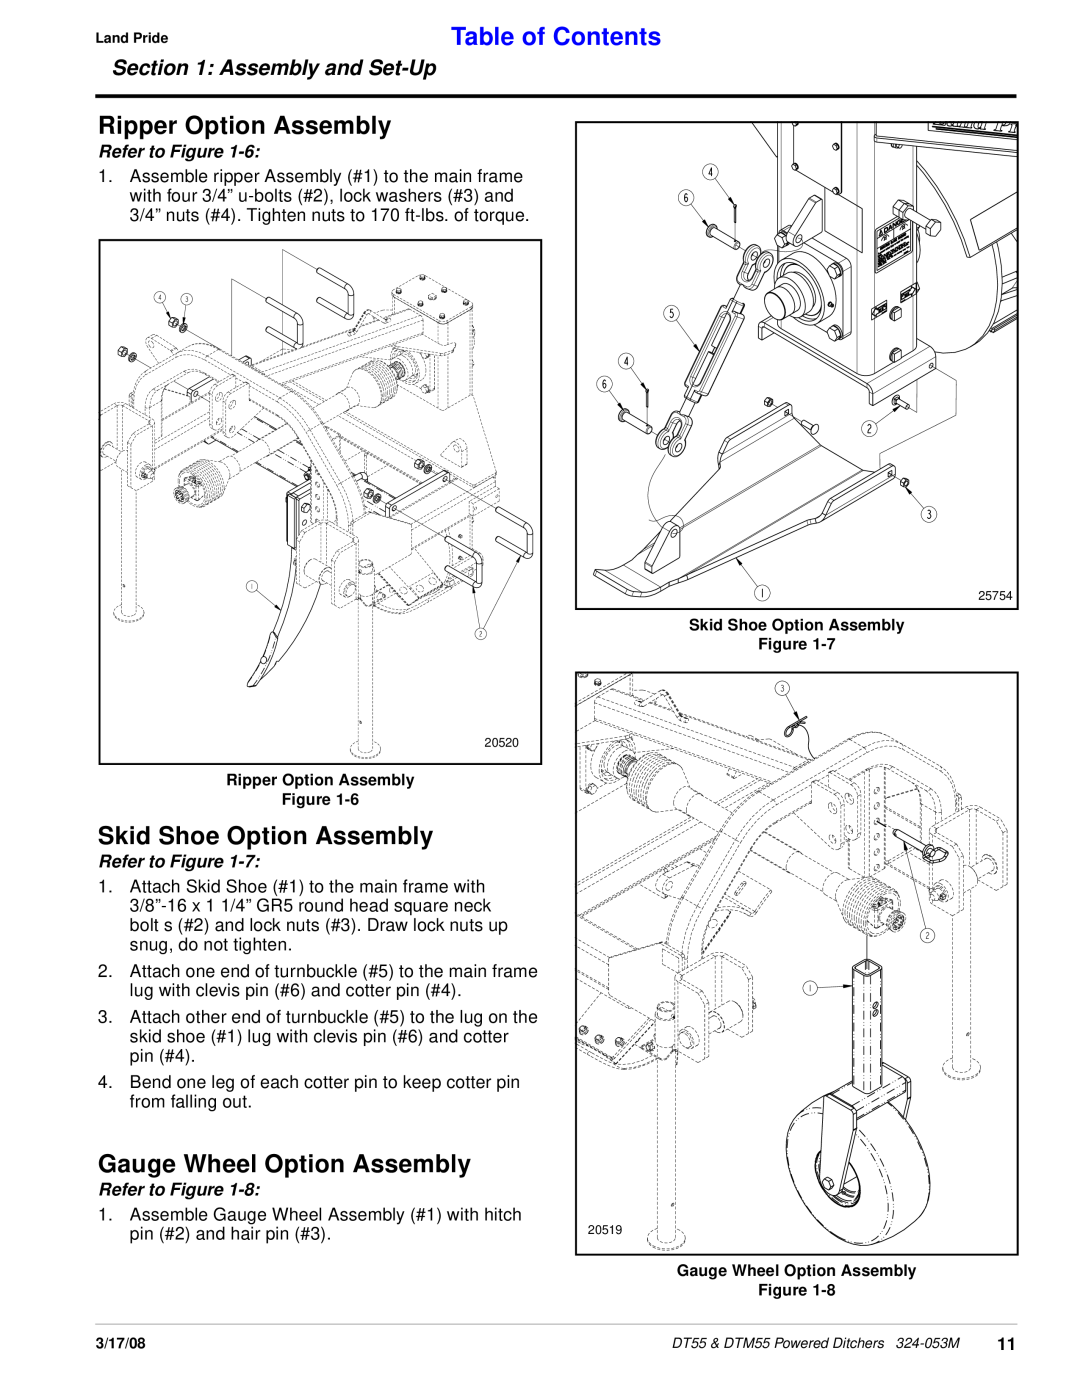 Land Pride DT55, DTM55 Ripper Option Assembly, Skid Shoe Option Assembly, Gauge Wheel Option Assembly, Table of Contents 